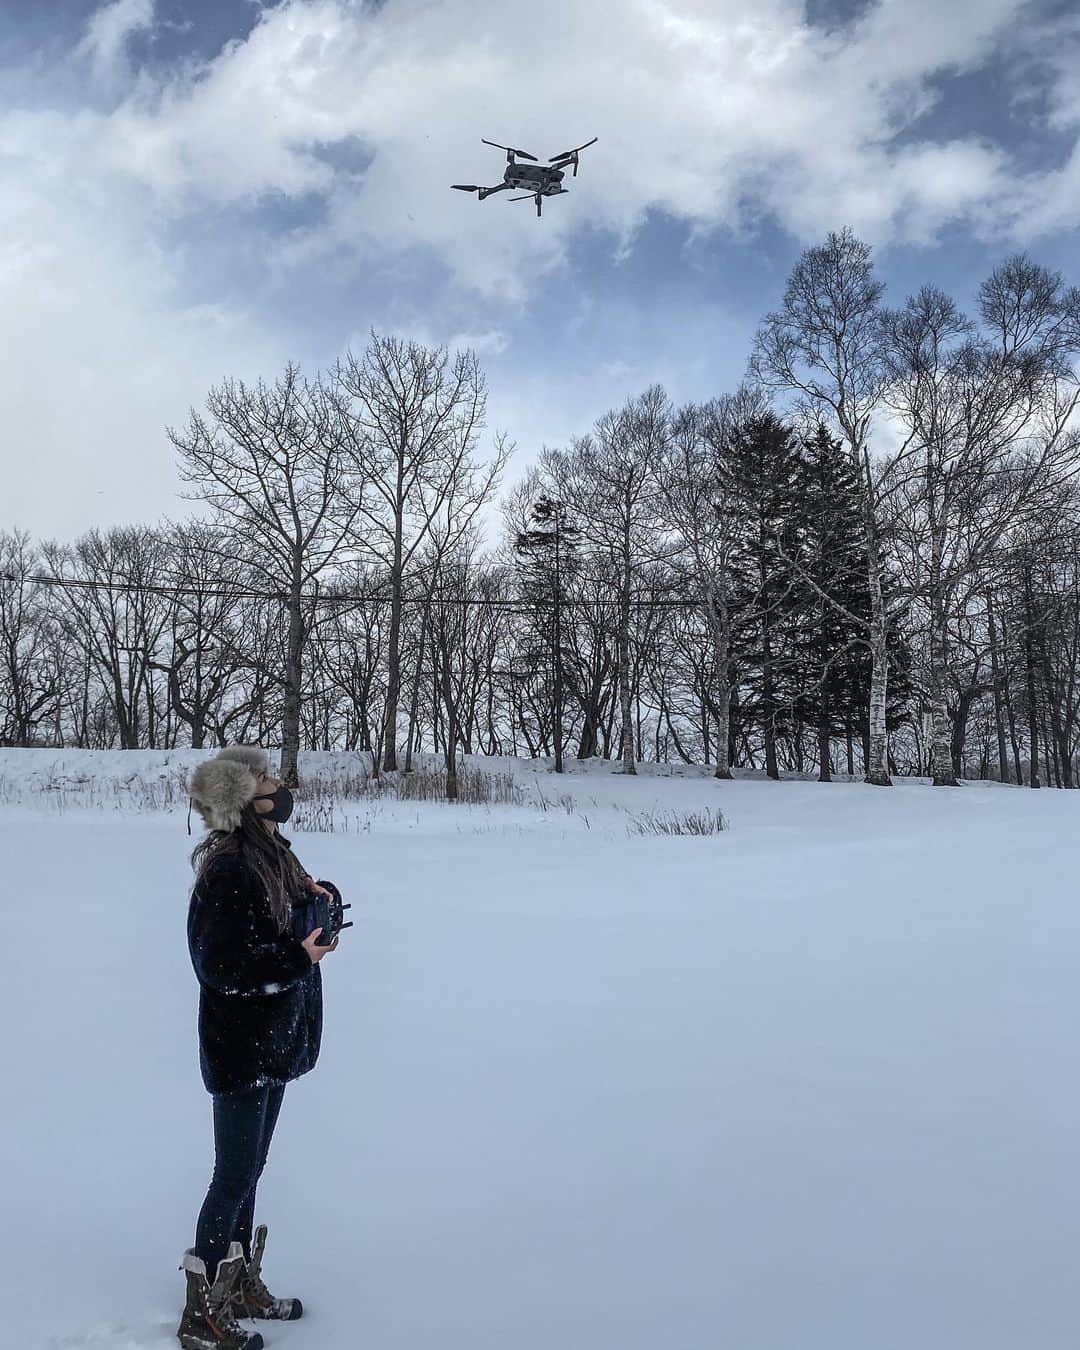 MEGUMIのインスタグラム：「釧路での空撮大会に参加しています❄️ 親指が凍りそうになりました☃️  日本のプロパイロットが招待される空撮コンテスト「DRONIST IN RESIDENCE @ UNTOUCHED HOKKAIDO」北海道釧路市を舞台に開催します。 本イベントでは10名のプロドローンパイロットが北海道の釧路市に集結し、3日間で撮影編集を行い制作した映像をコンテストしています❄️❄️ 釧路湿原国立公園や摩周湖など最高のロケーションを舞台にした、撮影風景や制作映像の発表会、豪華審査員による審査会の様子をYouTubeでのライブ配信でご覧いただけますので、ぜひご覧ください🤍 【ライブ配信URL】 https://youtu.be/d3KrhC2JtEE  #釧路#釧路湿原#北海道#空撮#untouchedhokkaido  #ドローン女子#ドローンパイロット」